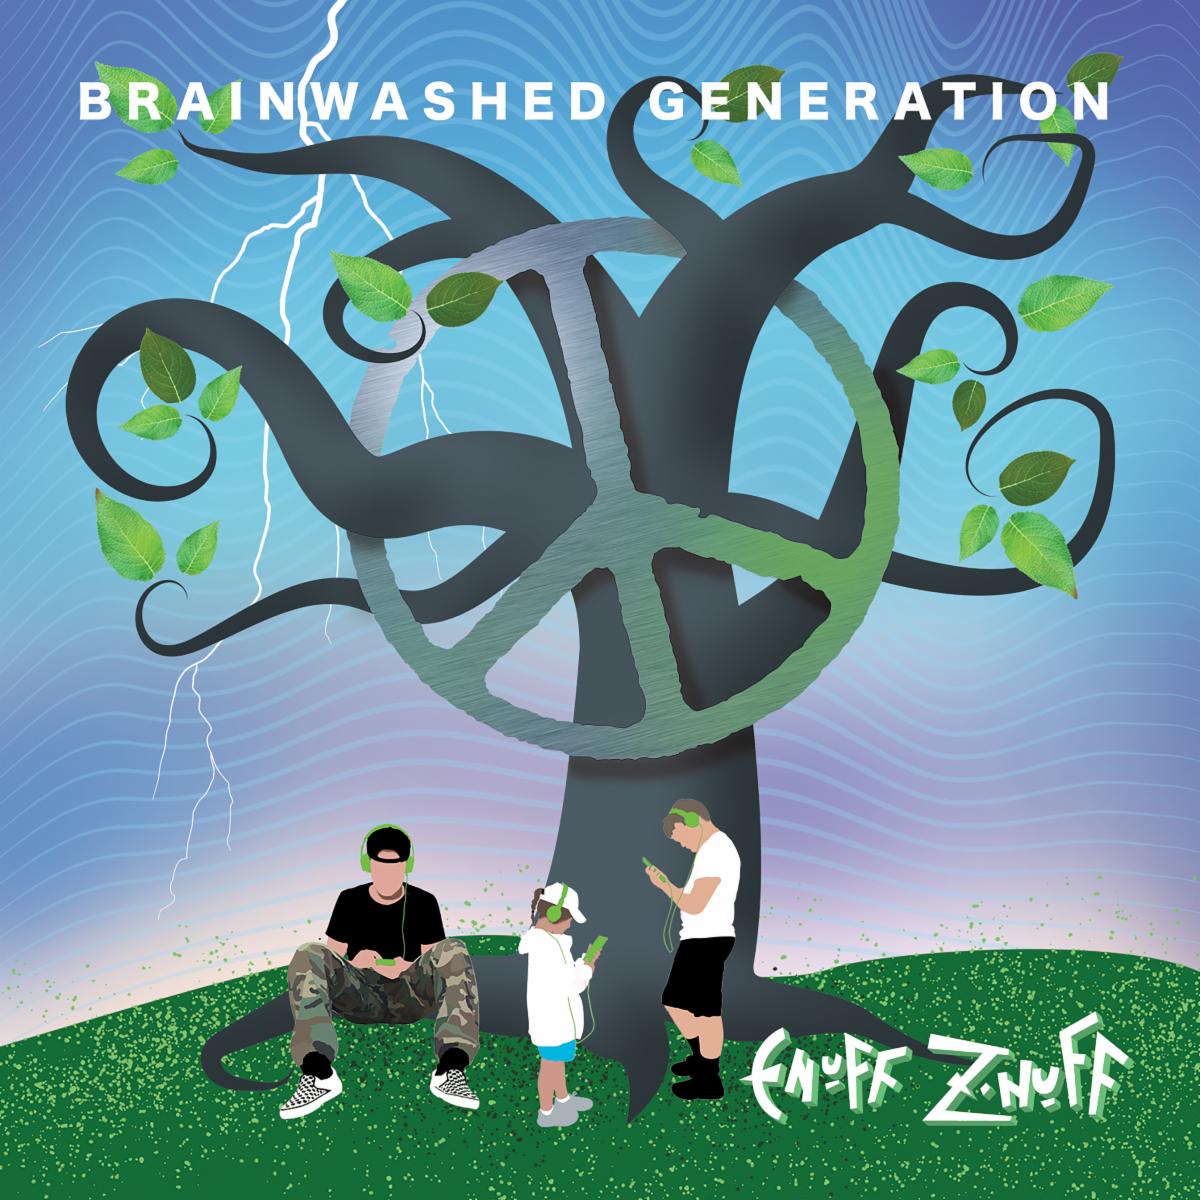 ENUFF Z'NUFF ANNOUNCES NEW STUDIO ALBUM "BRAINWASHED GENERATION"